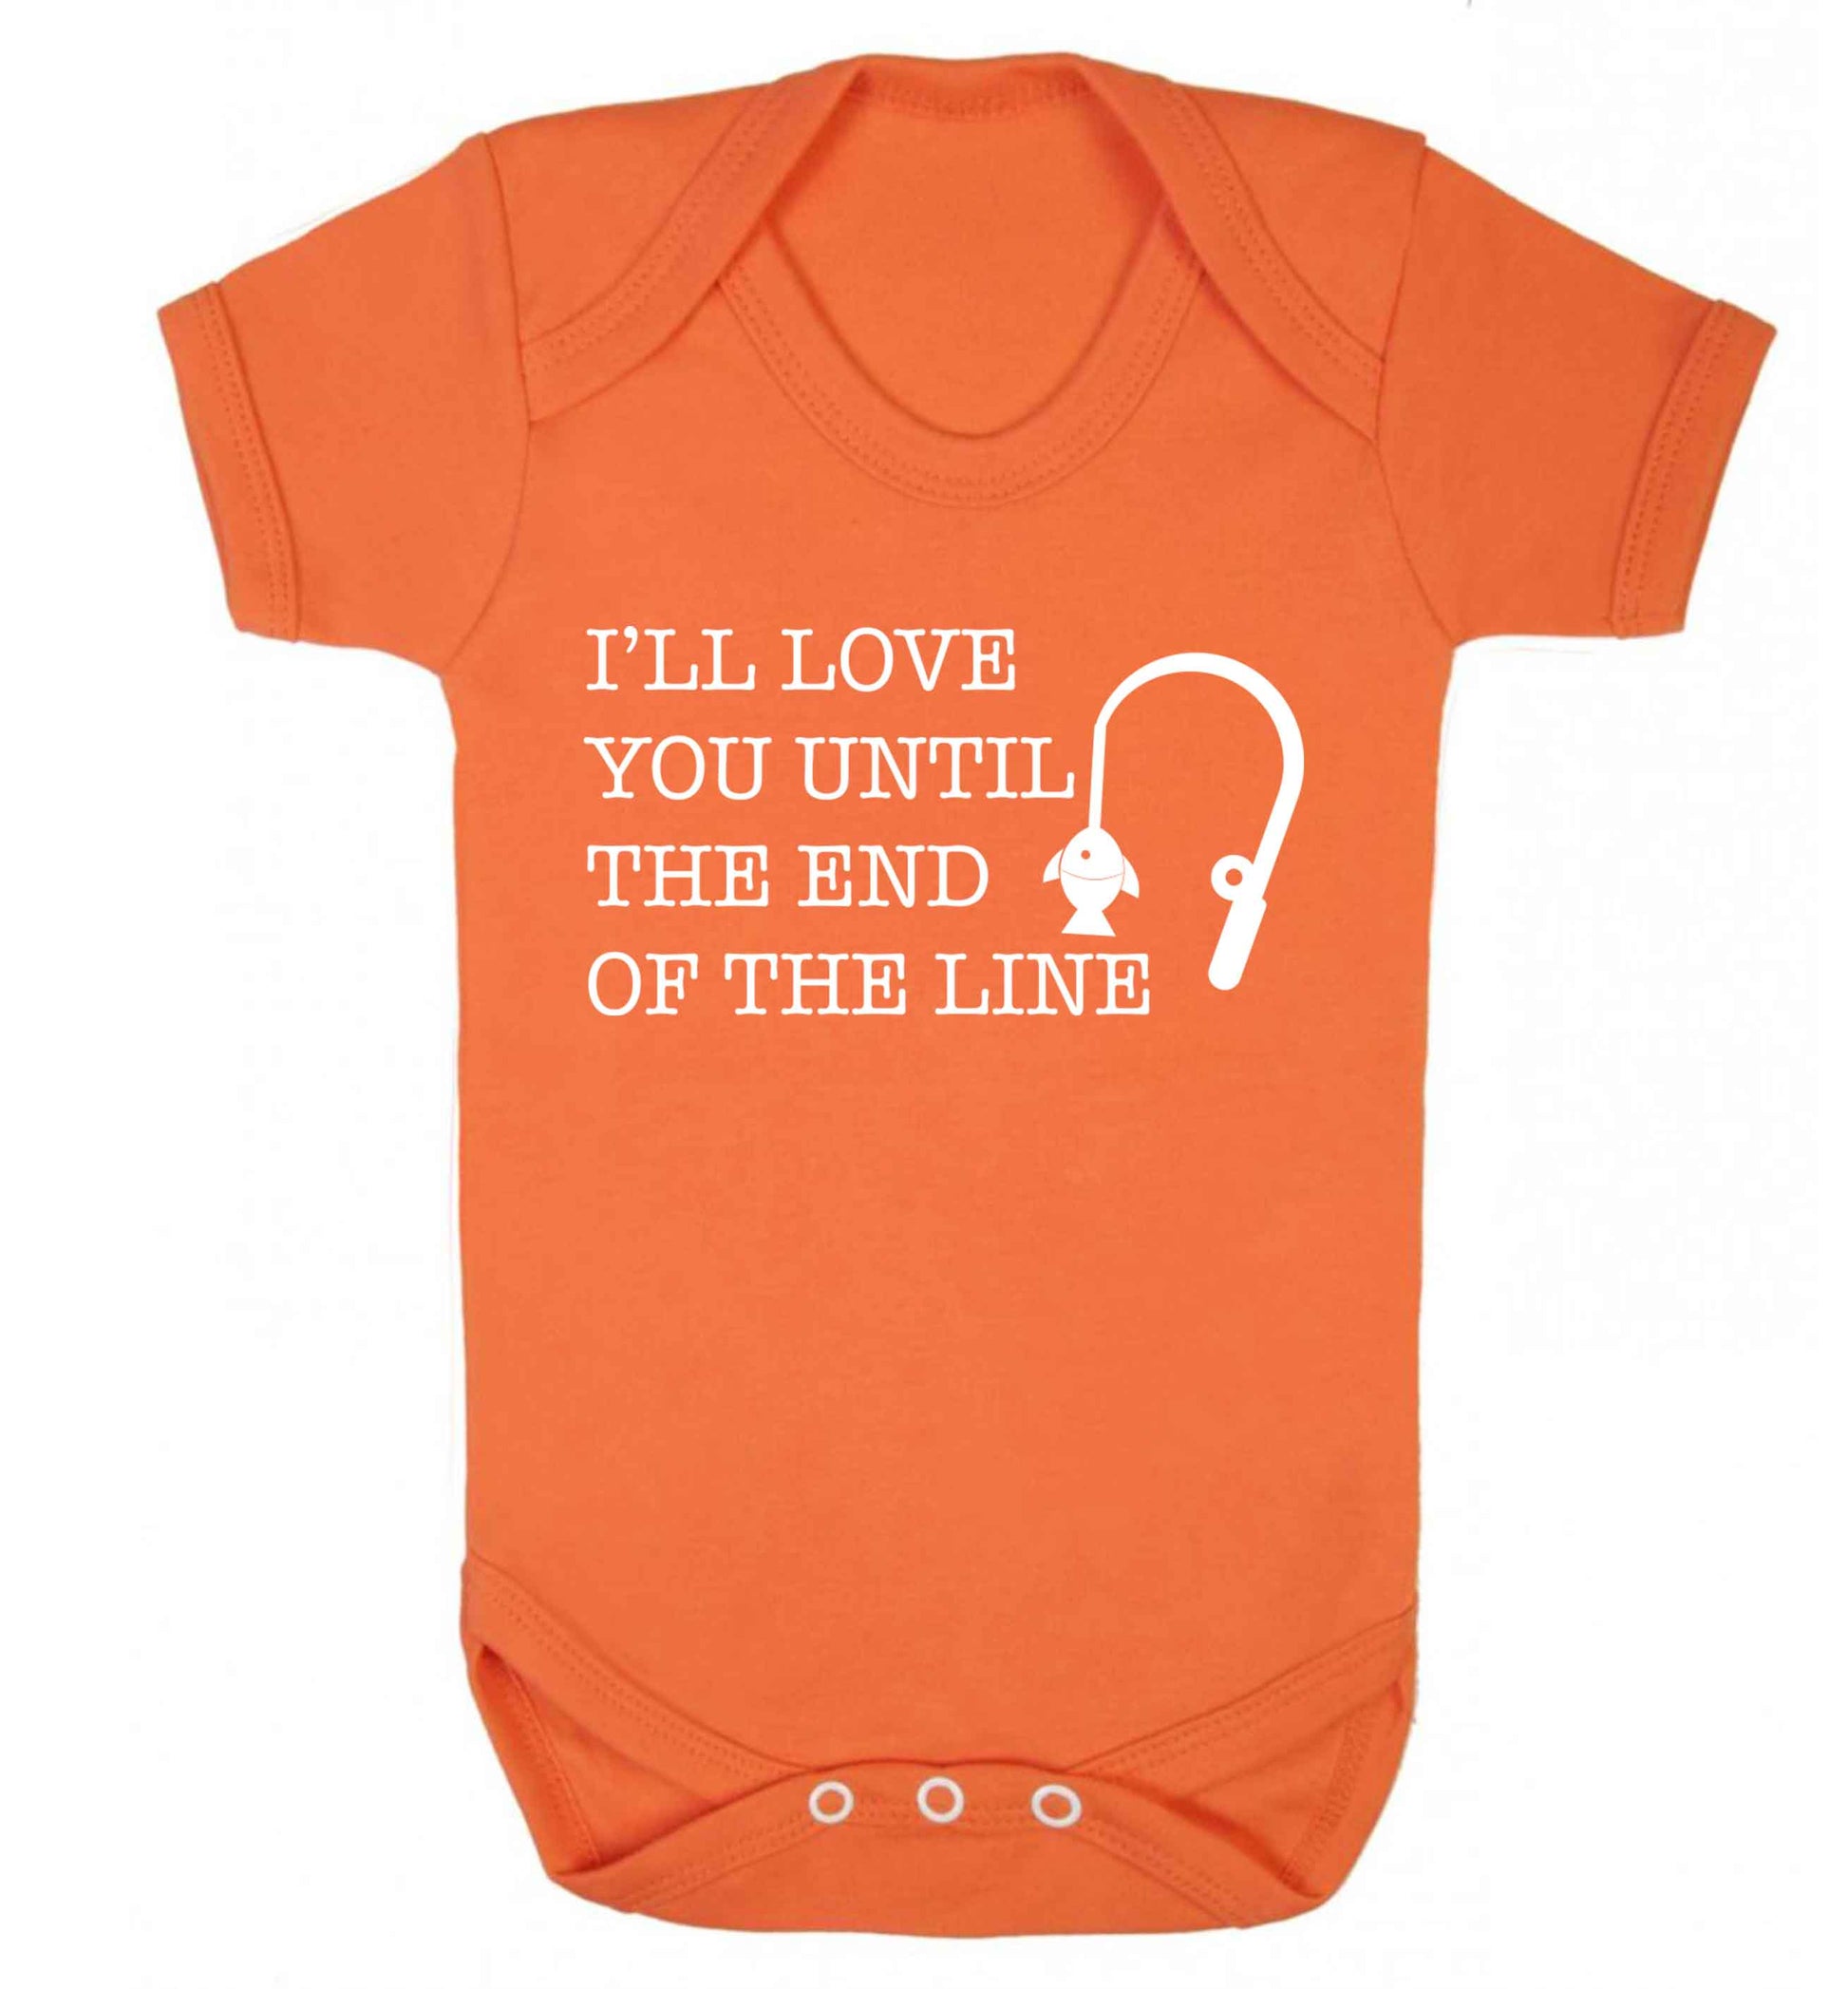 I'll love you until the end of the line Baby Vest orange 18-24 months